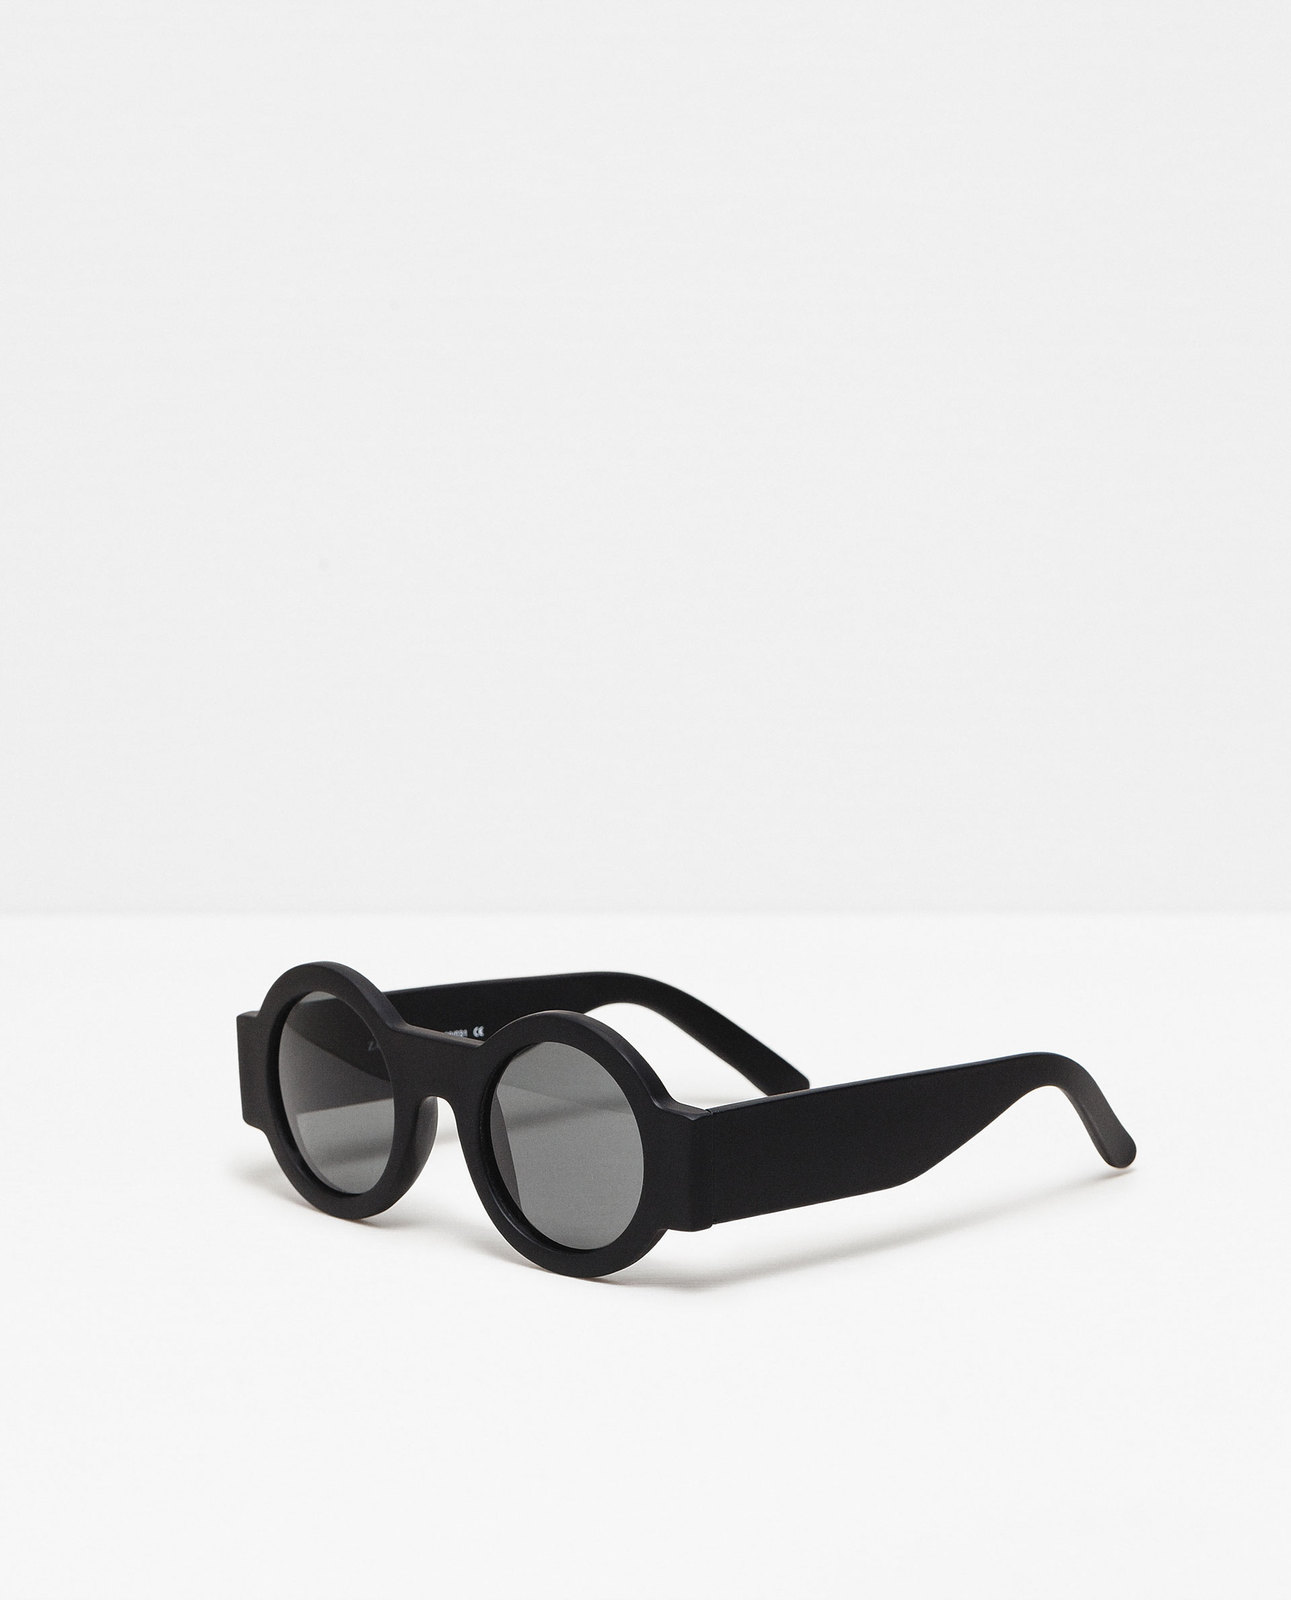 Zara fekete kerek napszemüveg fotója